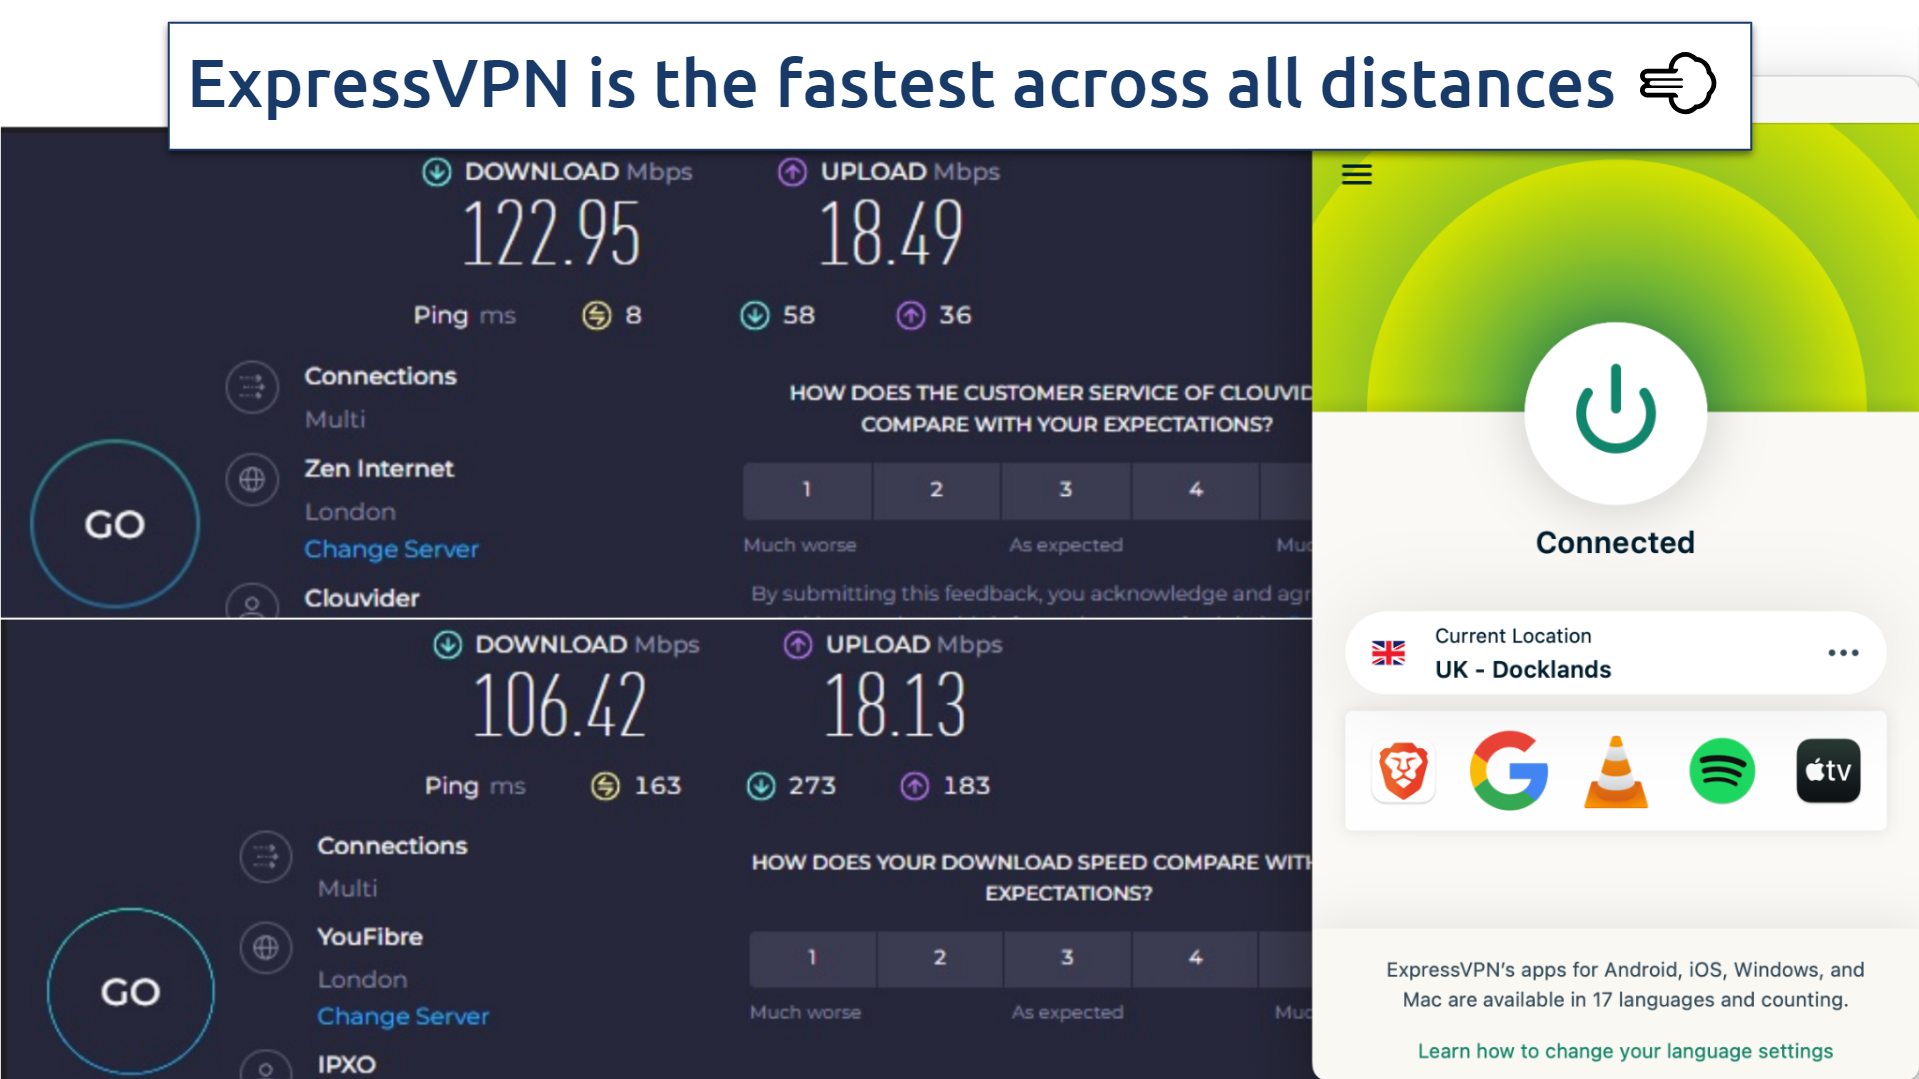 Screenshot showing the ExpressVPN app connected to a UK - Docklands server over an online speed test